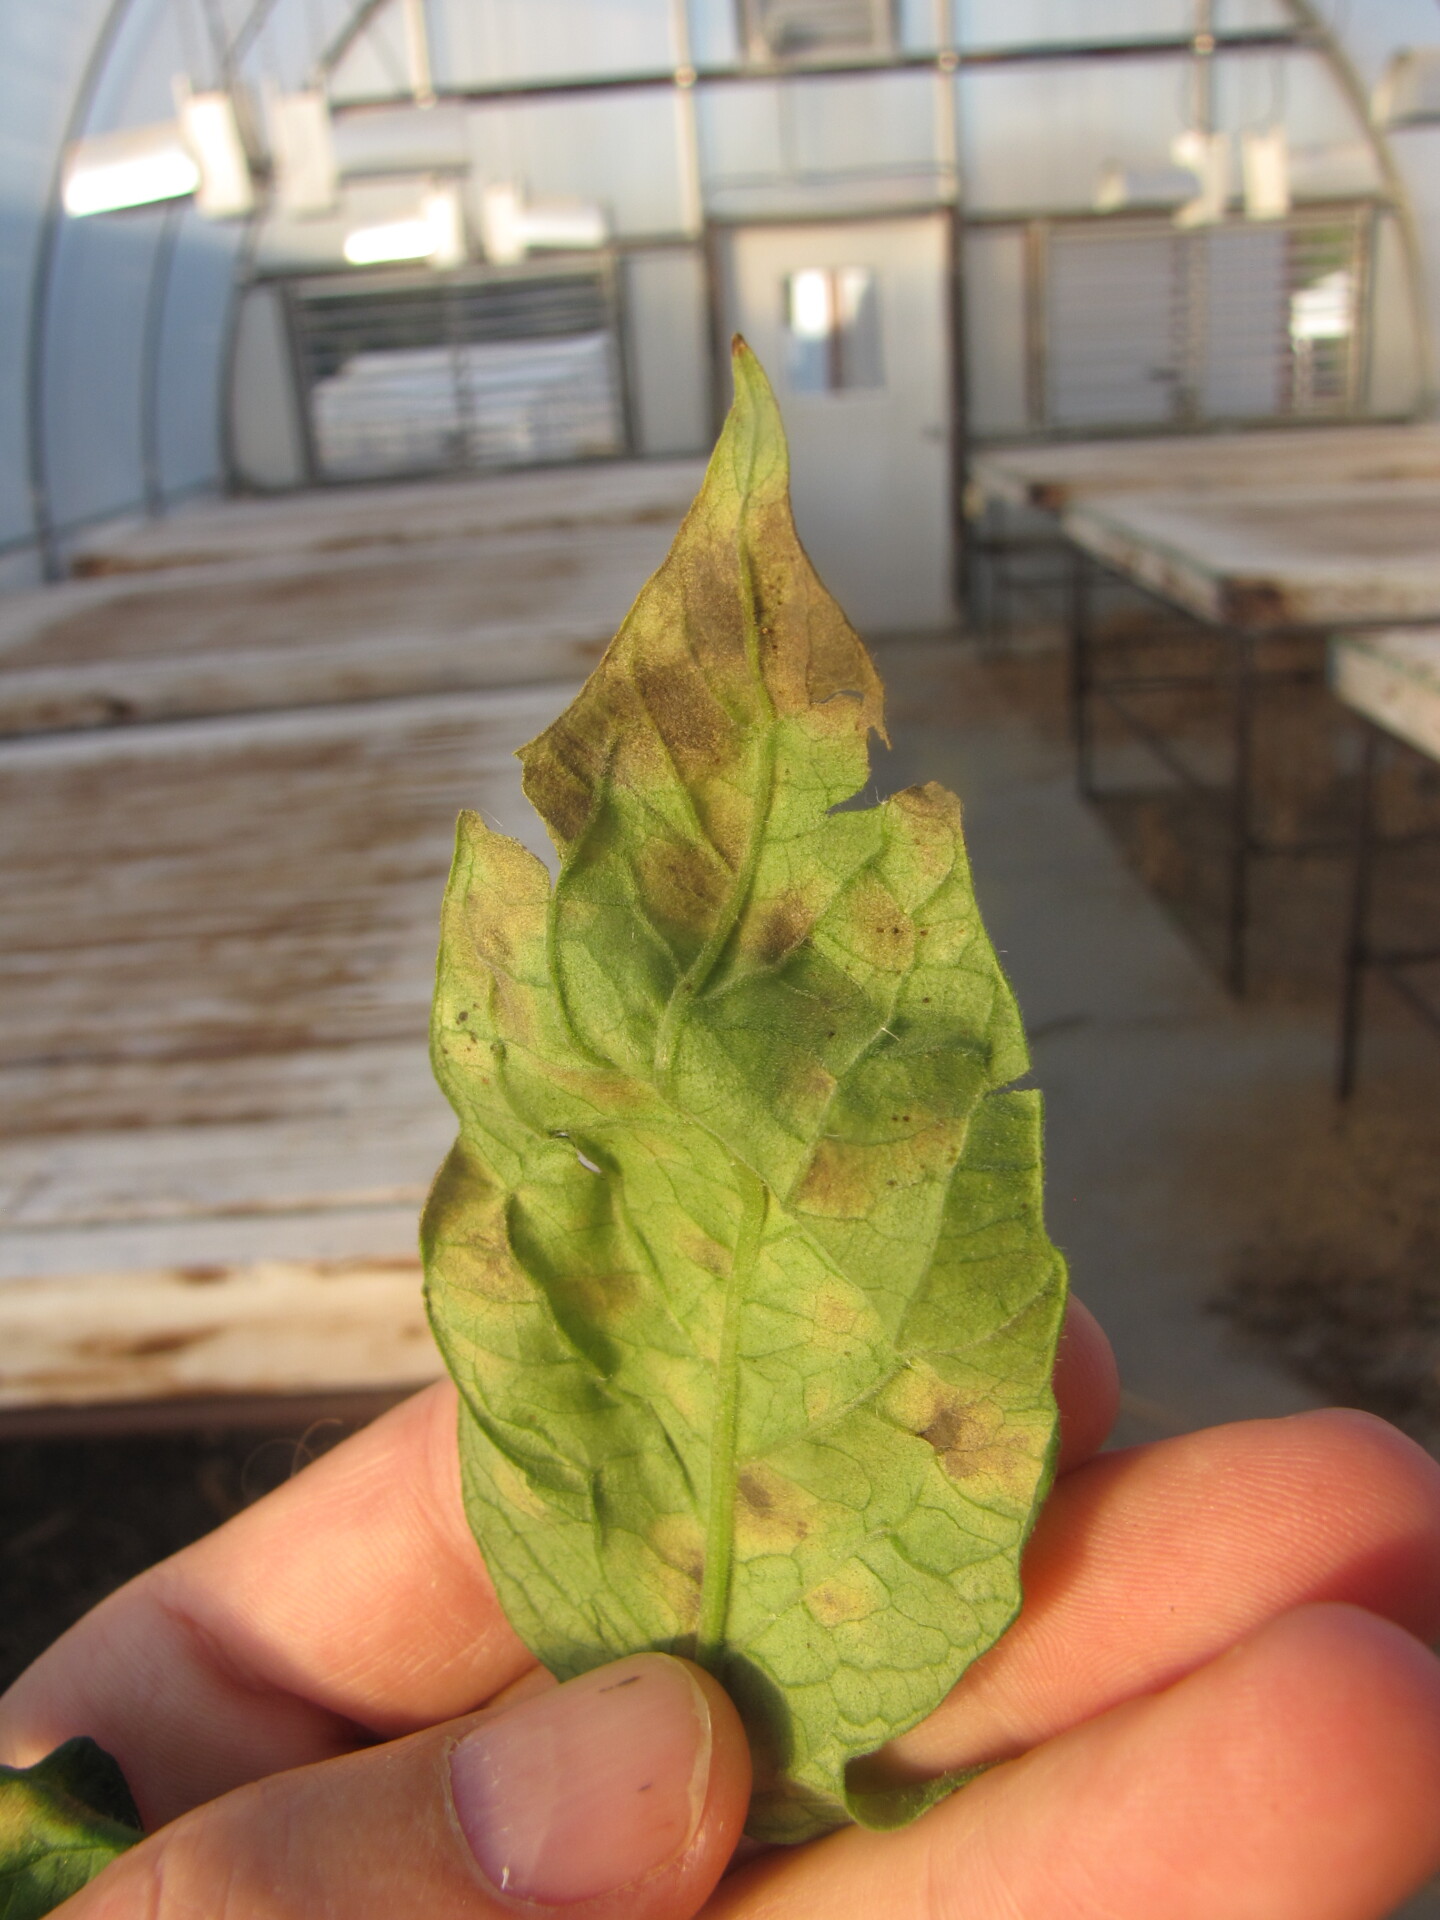 Underside of tomato leaf with cercospora leaf mold. 